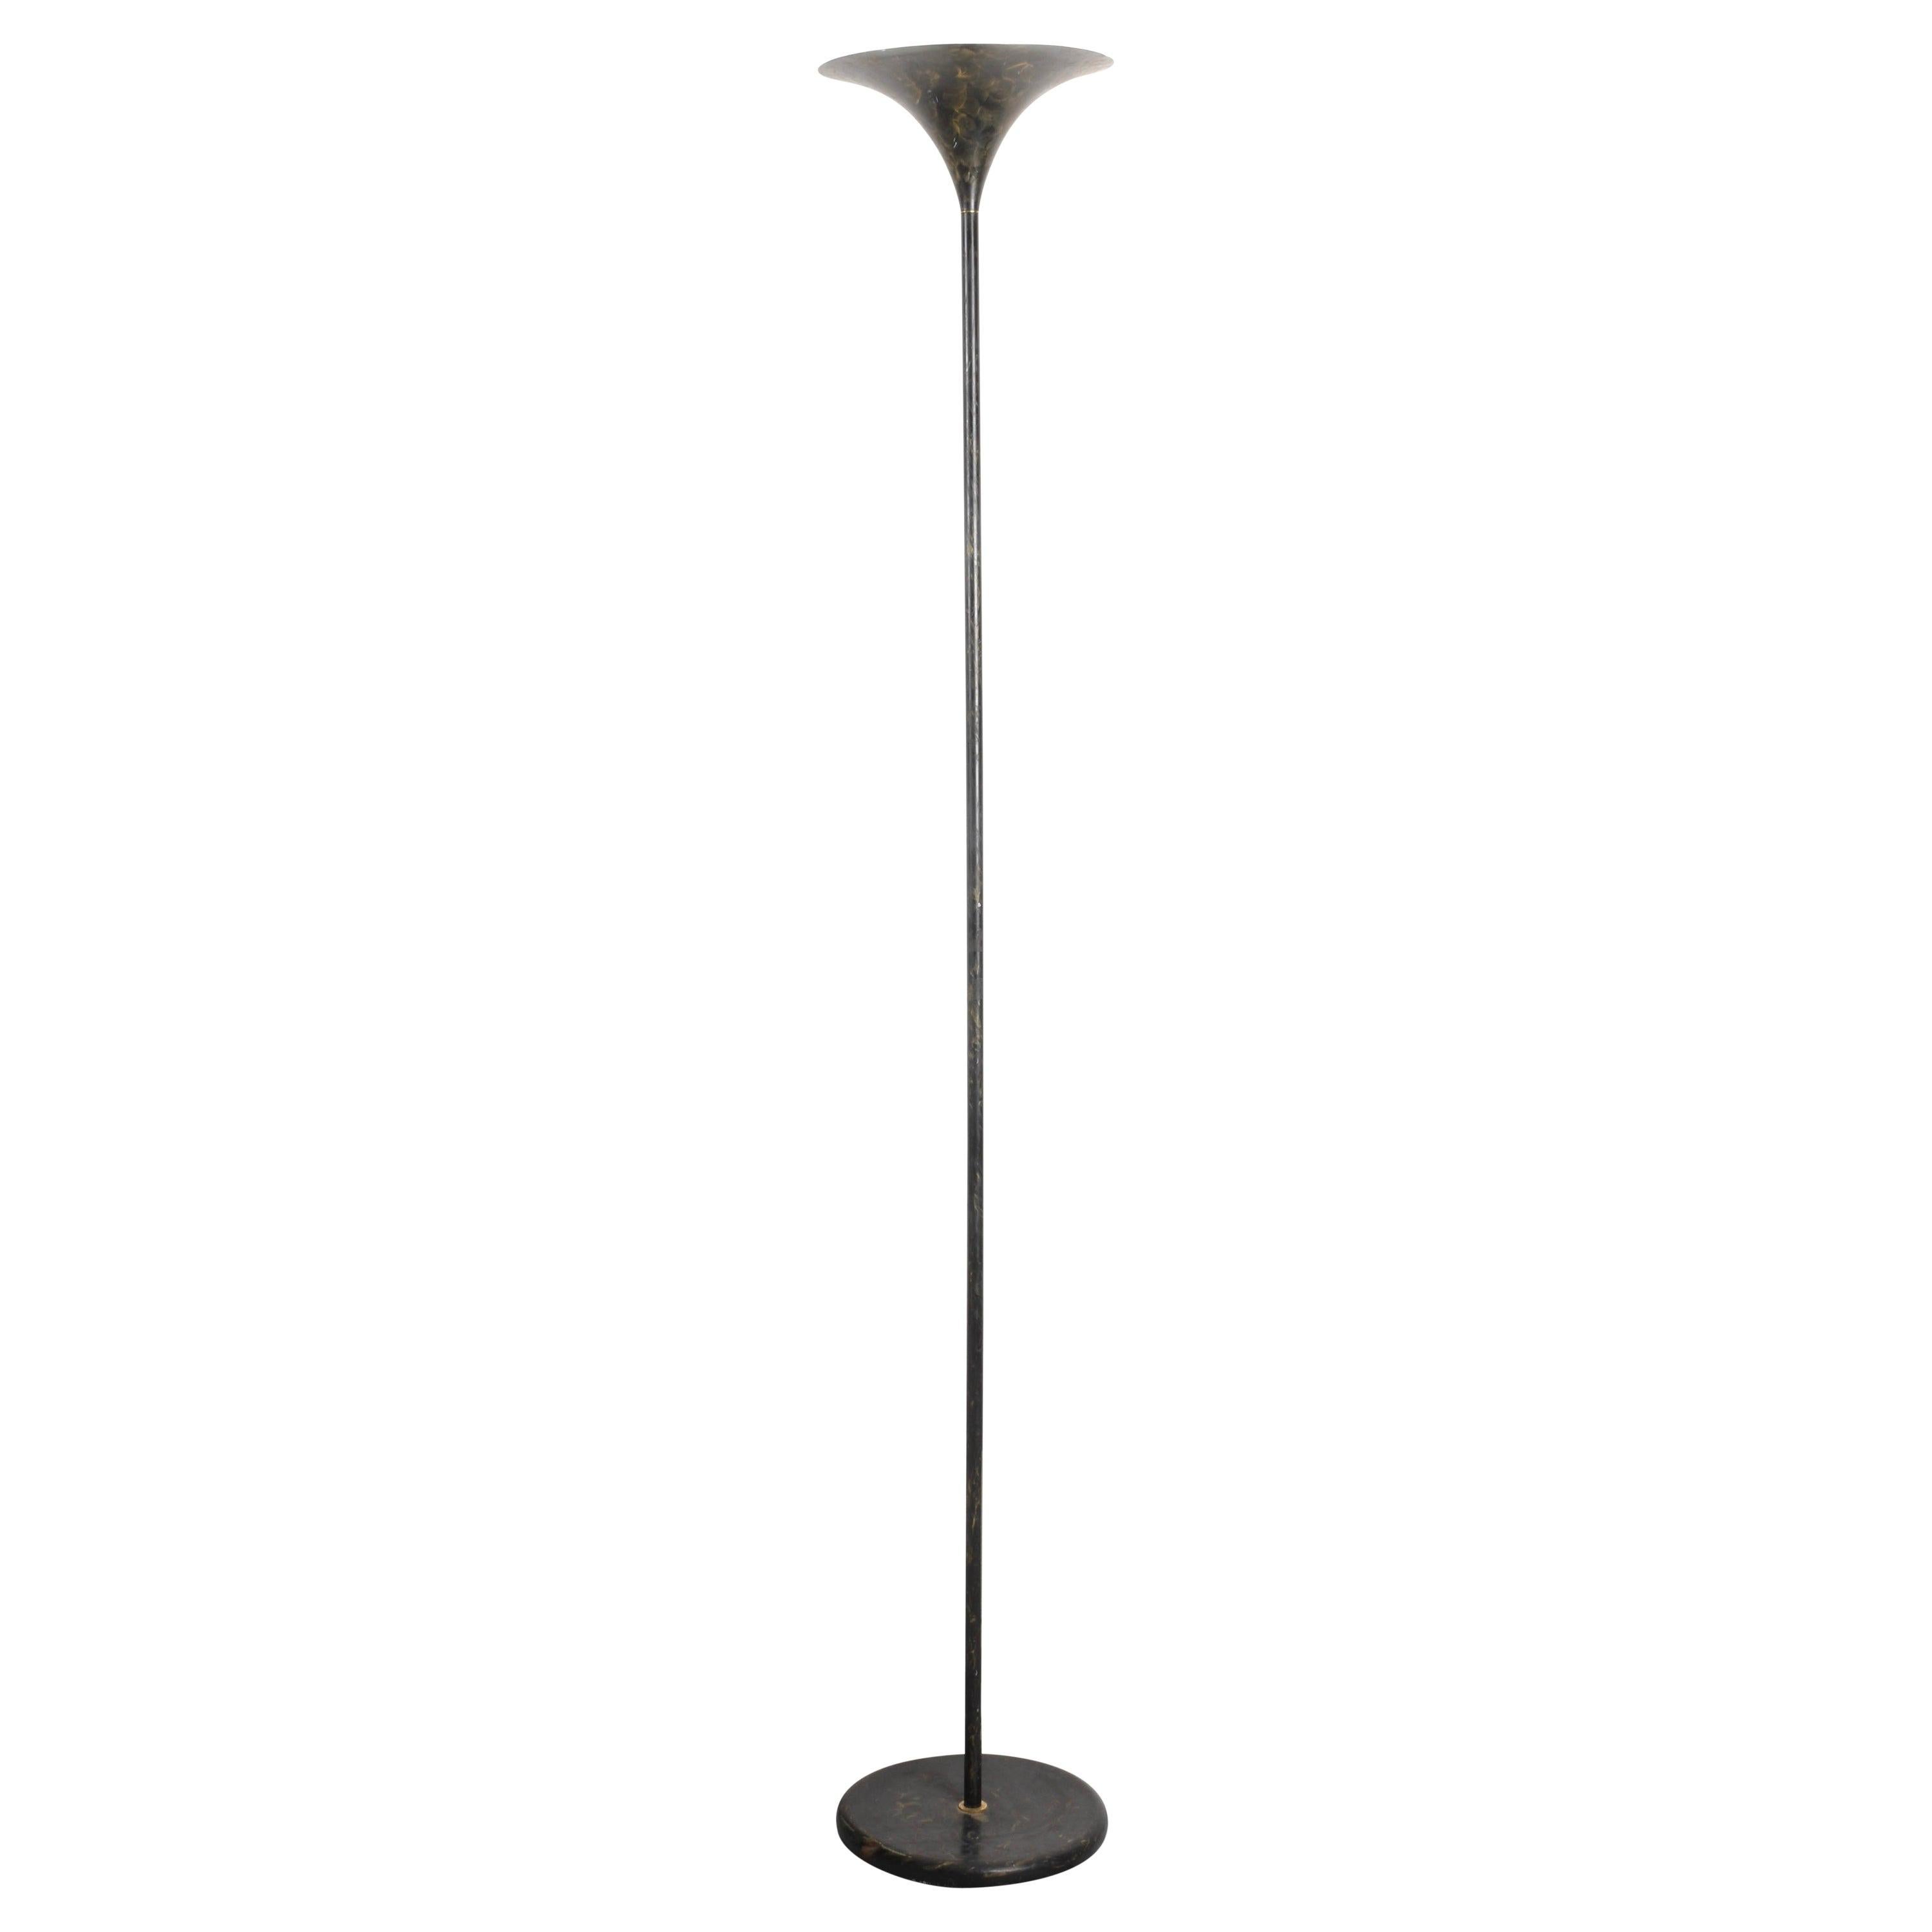 Midcentury Black Aluminum Tulip Italian Floor Lamp with Gold Finishes, 1970s For Sale